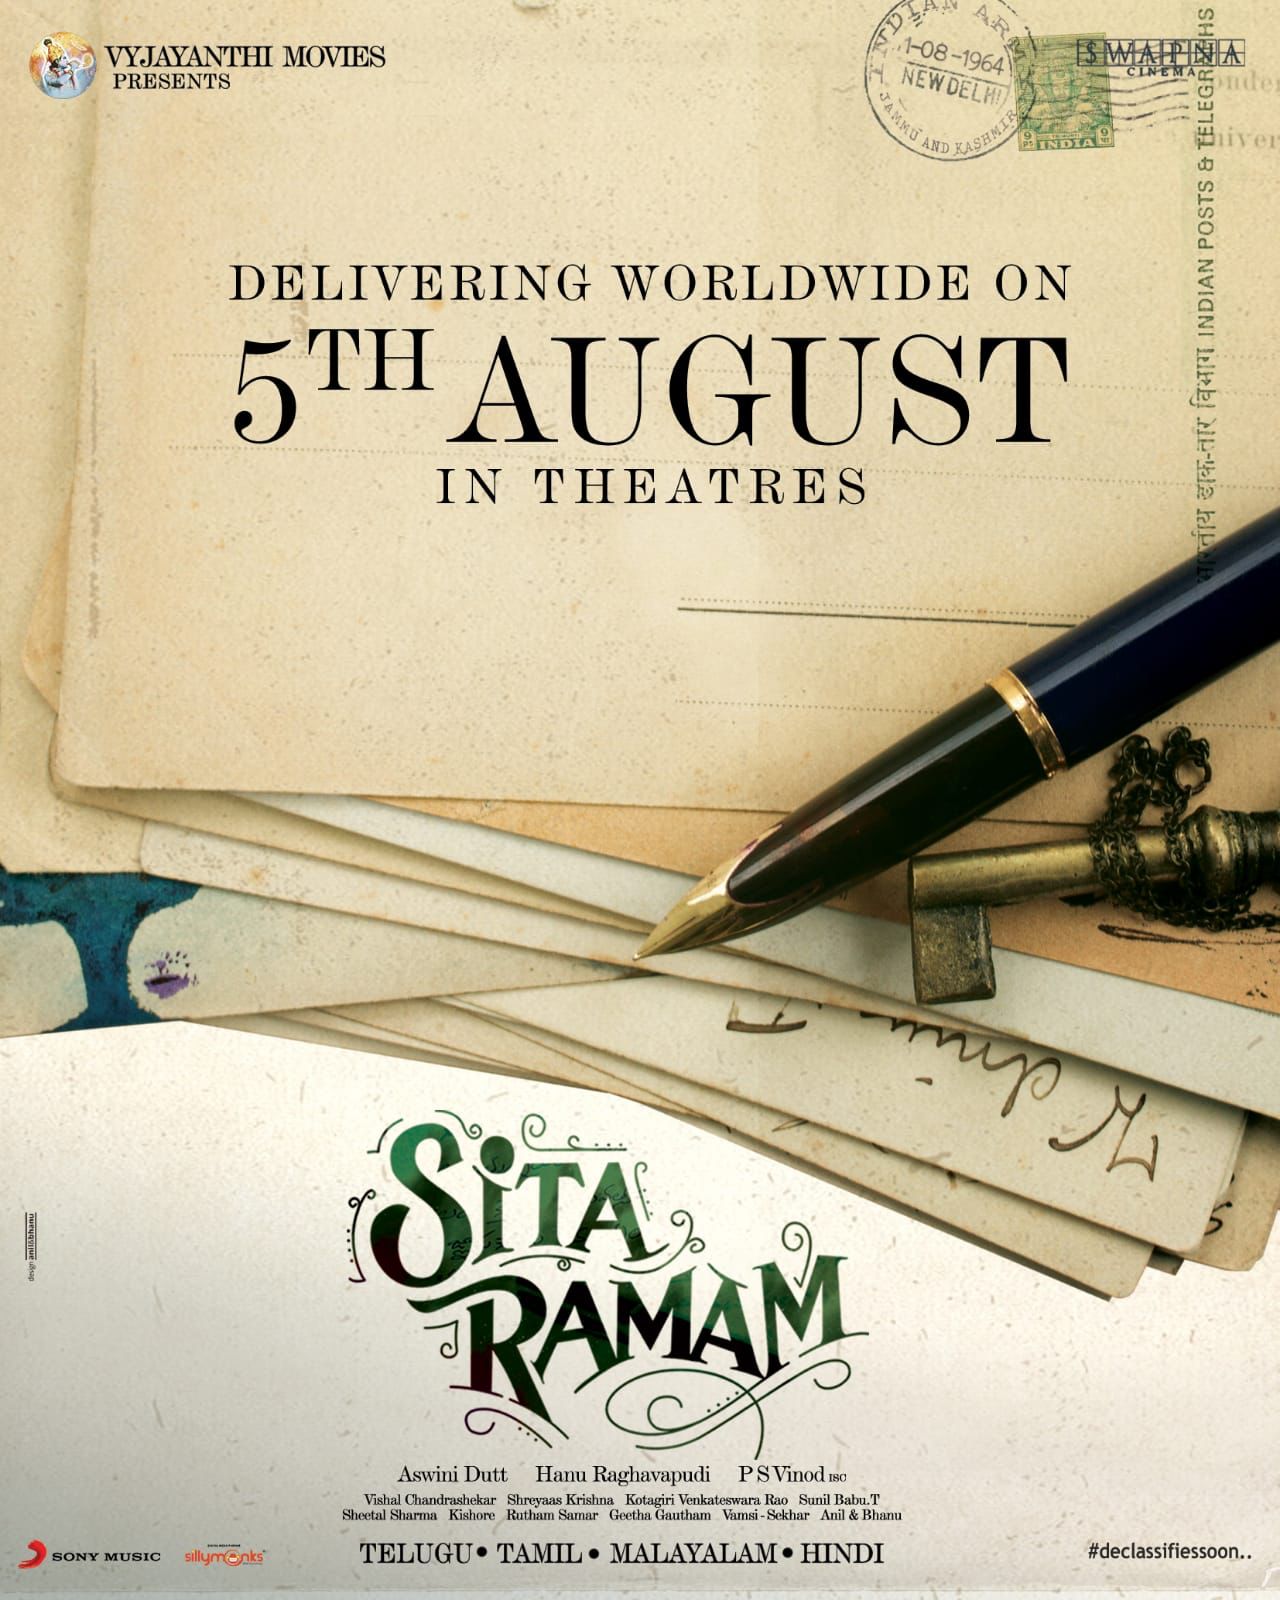 Dulquer Salmaan Rashmika Mandanna Sita Ramam is Releasing Worldwide In Theatres On 5th August